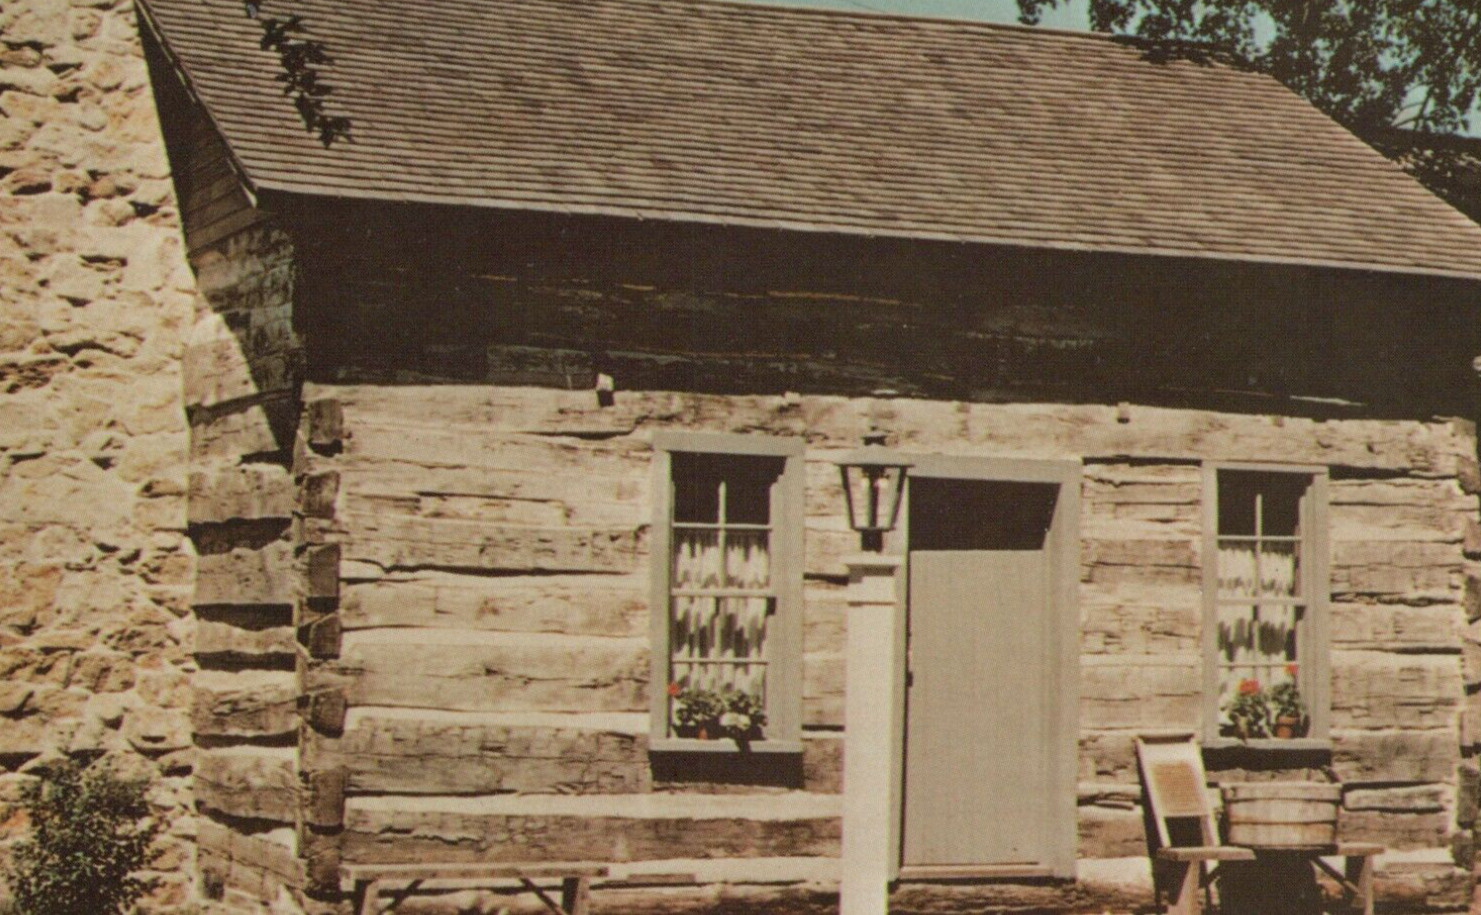 Pioneer Log Cabin at Pella Historic Museum in Iowa Chrome Vintage Post Card